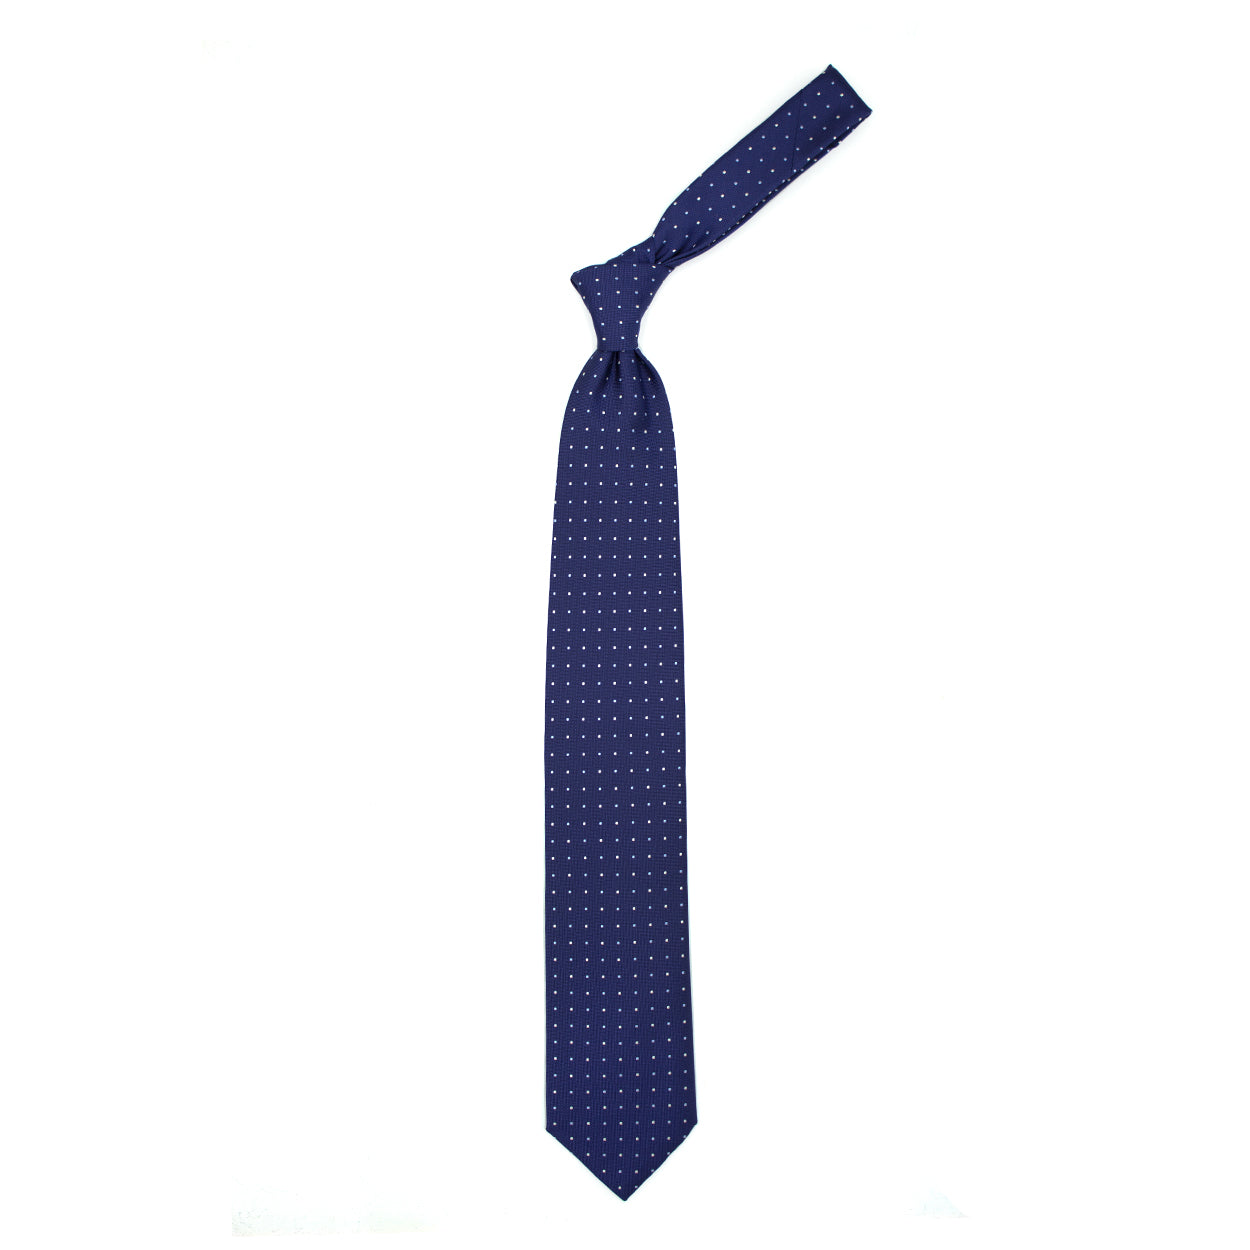 Cravatta blu con pallini bianchi e azzurri